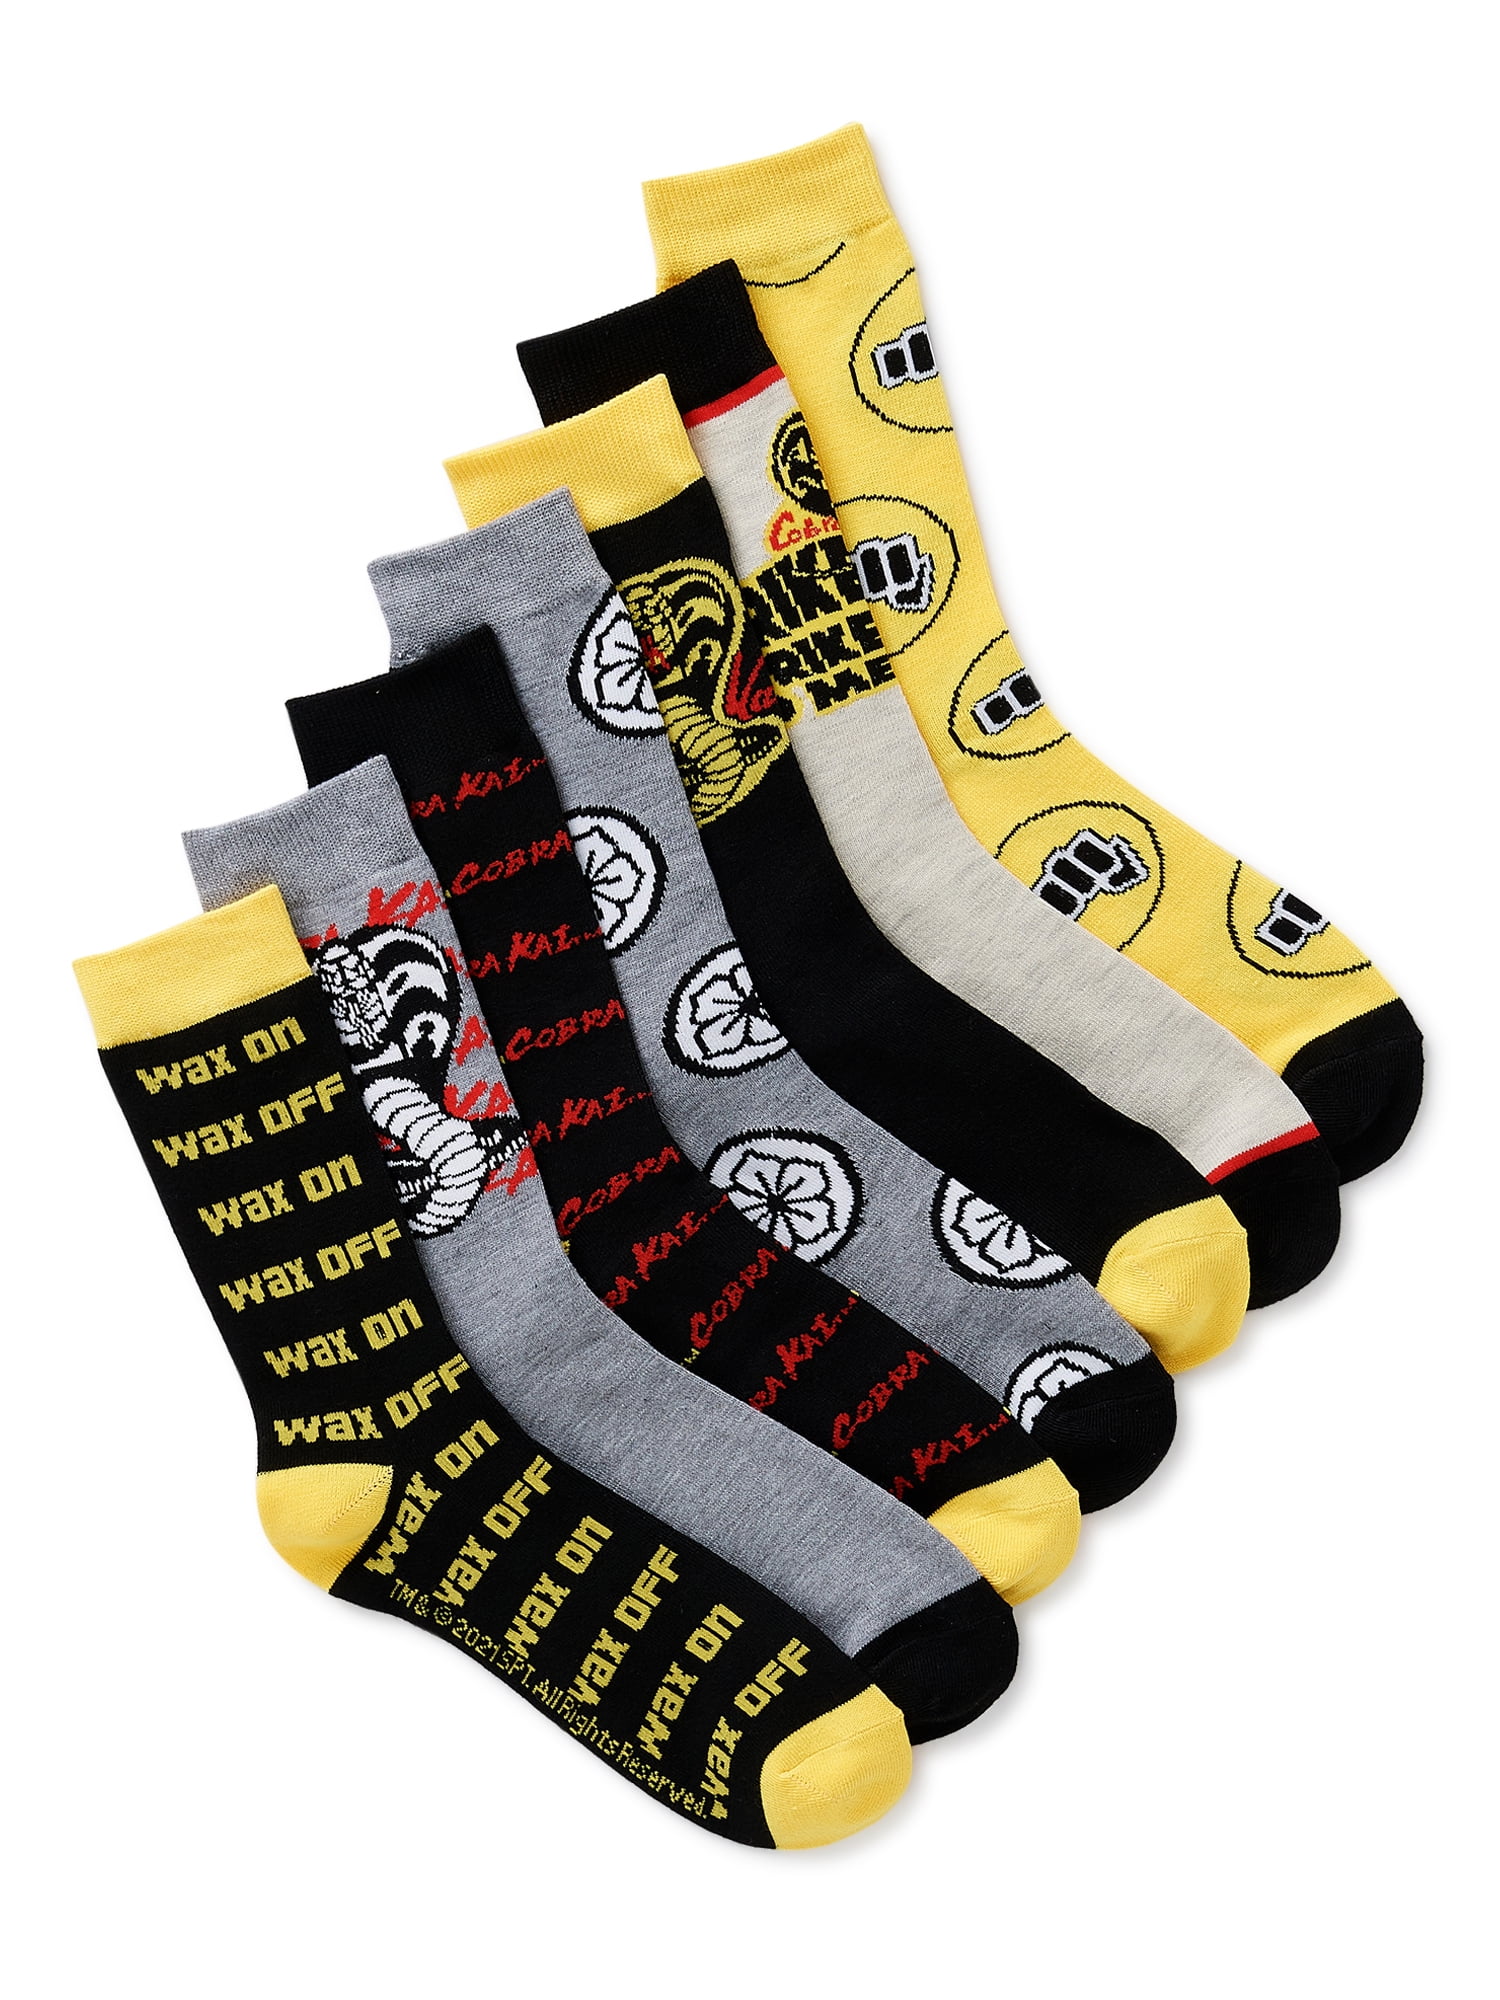 2-Pk Athletic Socks Celebrate Shop Women's Ankle Socks Black & White One Size 